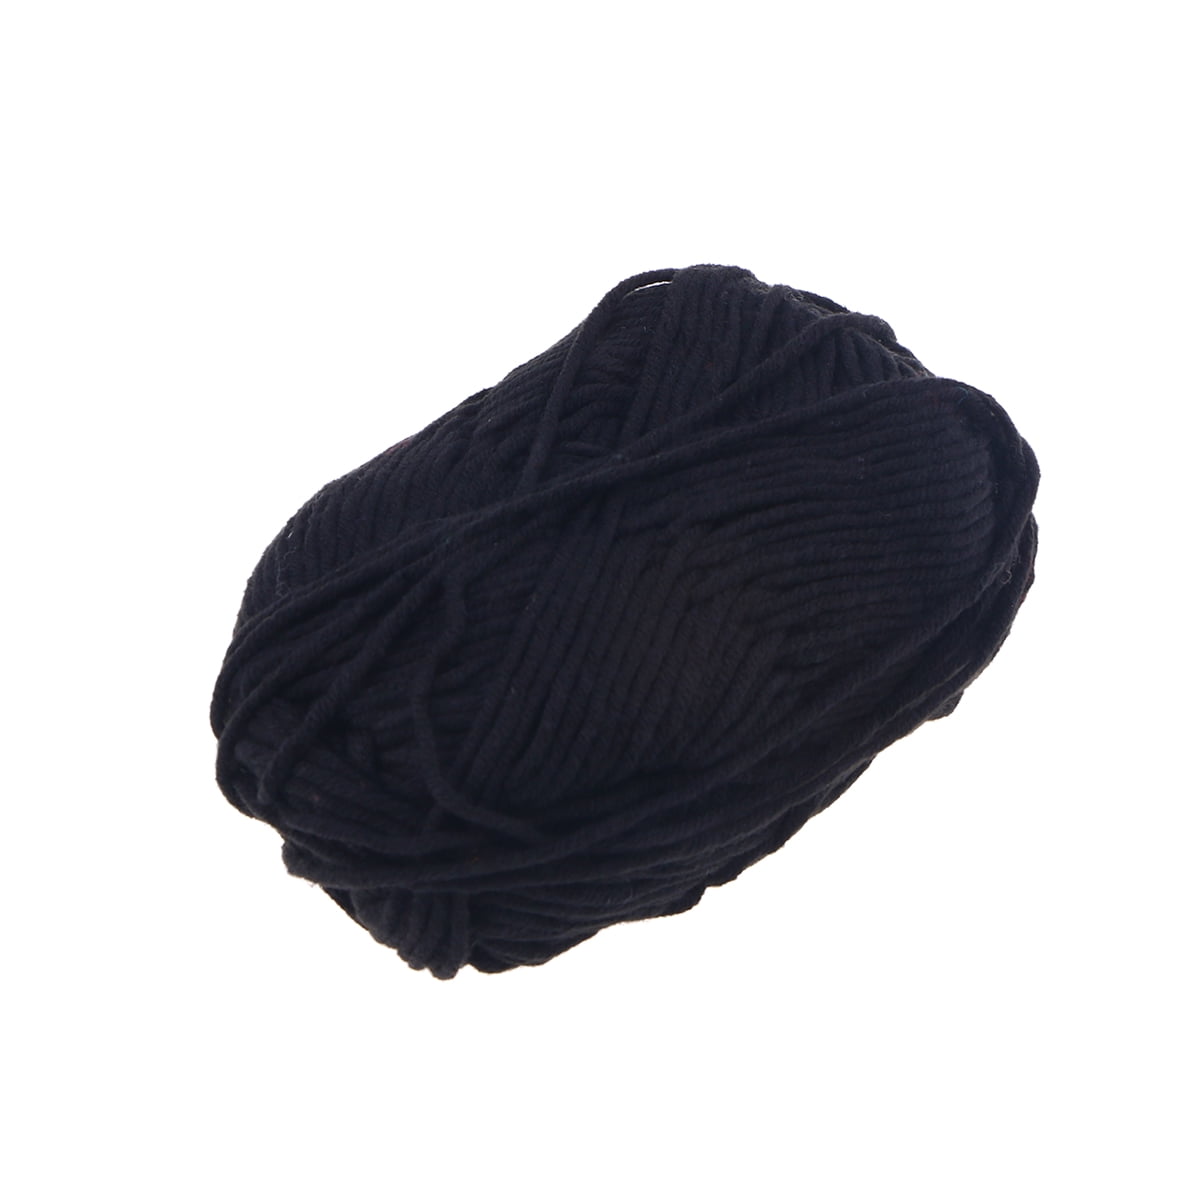 IMIKEYA 50g Milk Cotton Yarn Skeins, Cotton Chunky Hand- Woven Crochet  Knitting Wool Yarn Warm Yarn for DIY Adults and KidsCrocheting Sweaters  Hats